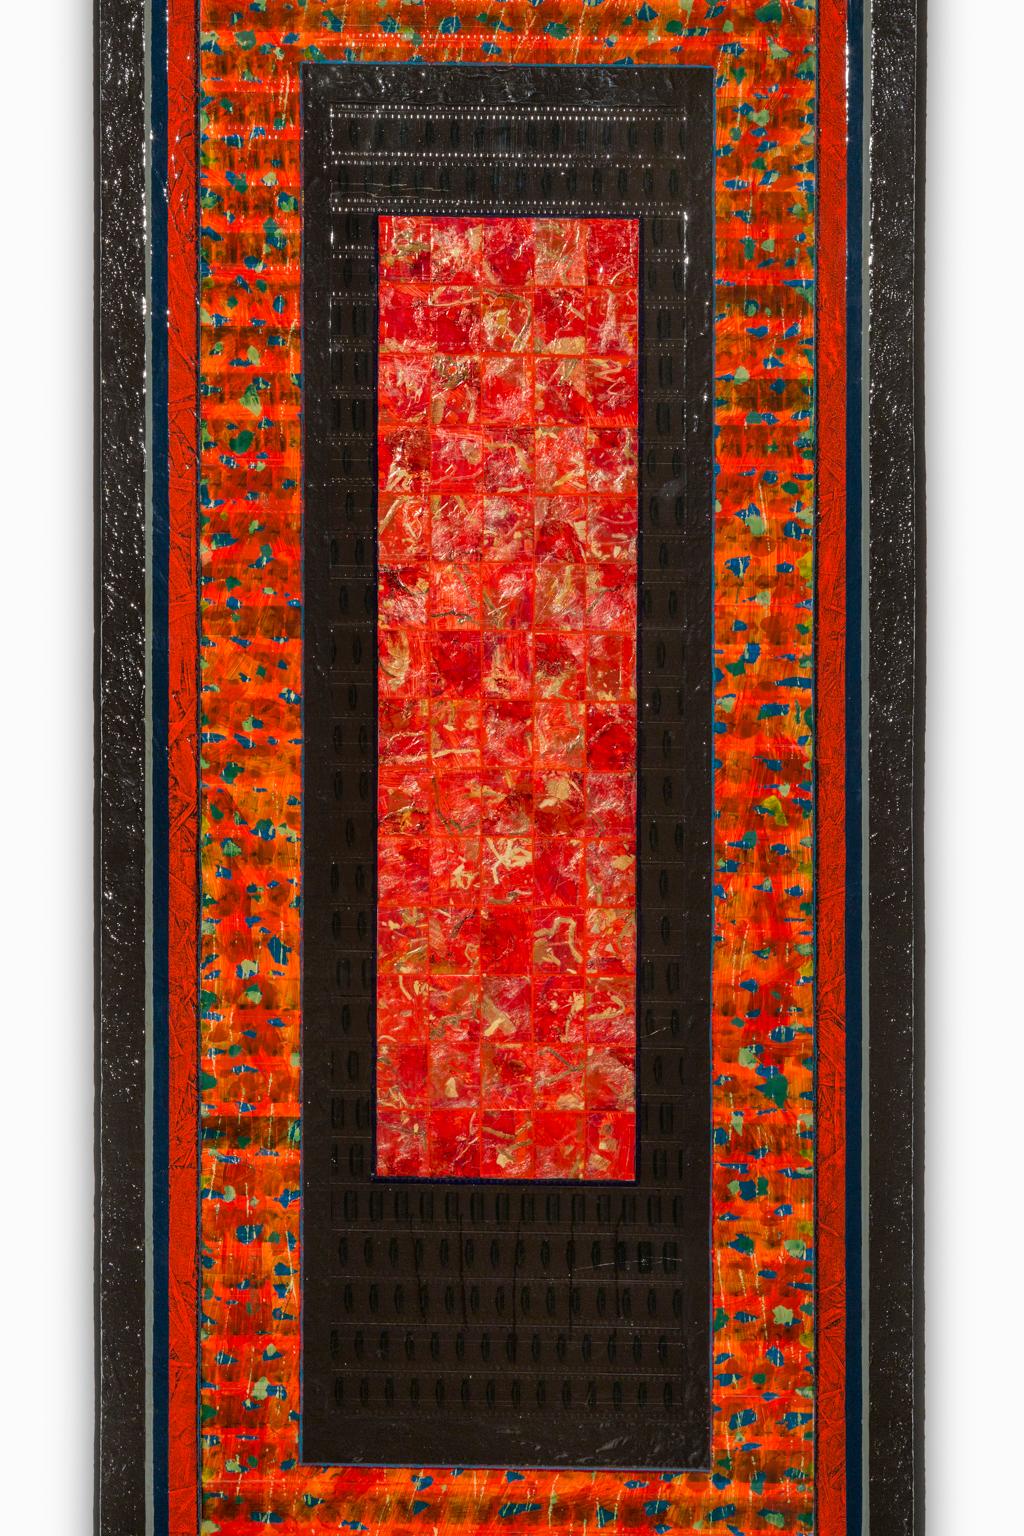 « Mandarin », collage de techniques mixtes rouge et noir - Mixed Media Art de Joseph Bernard